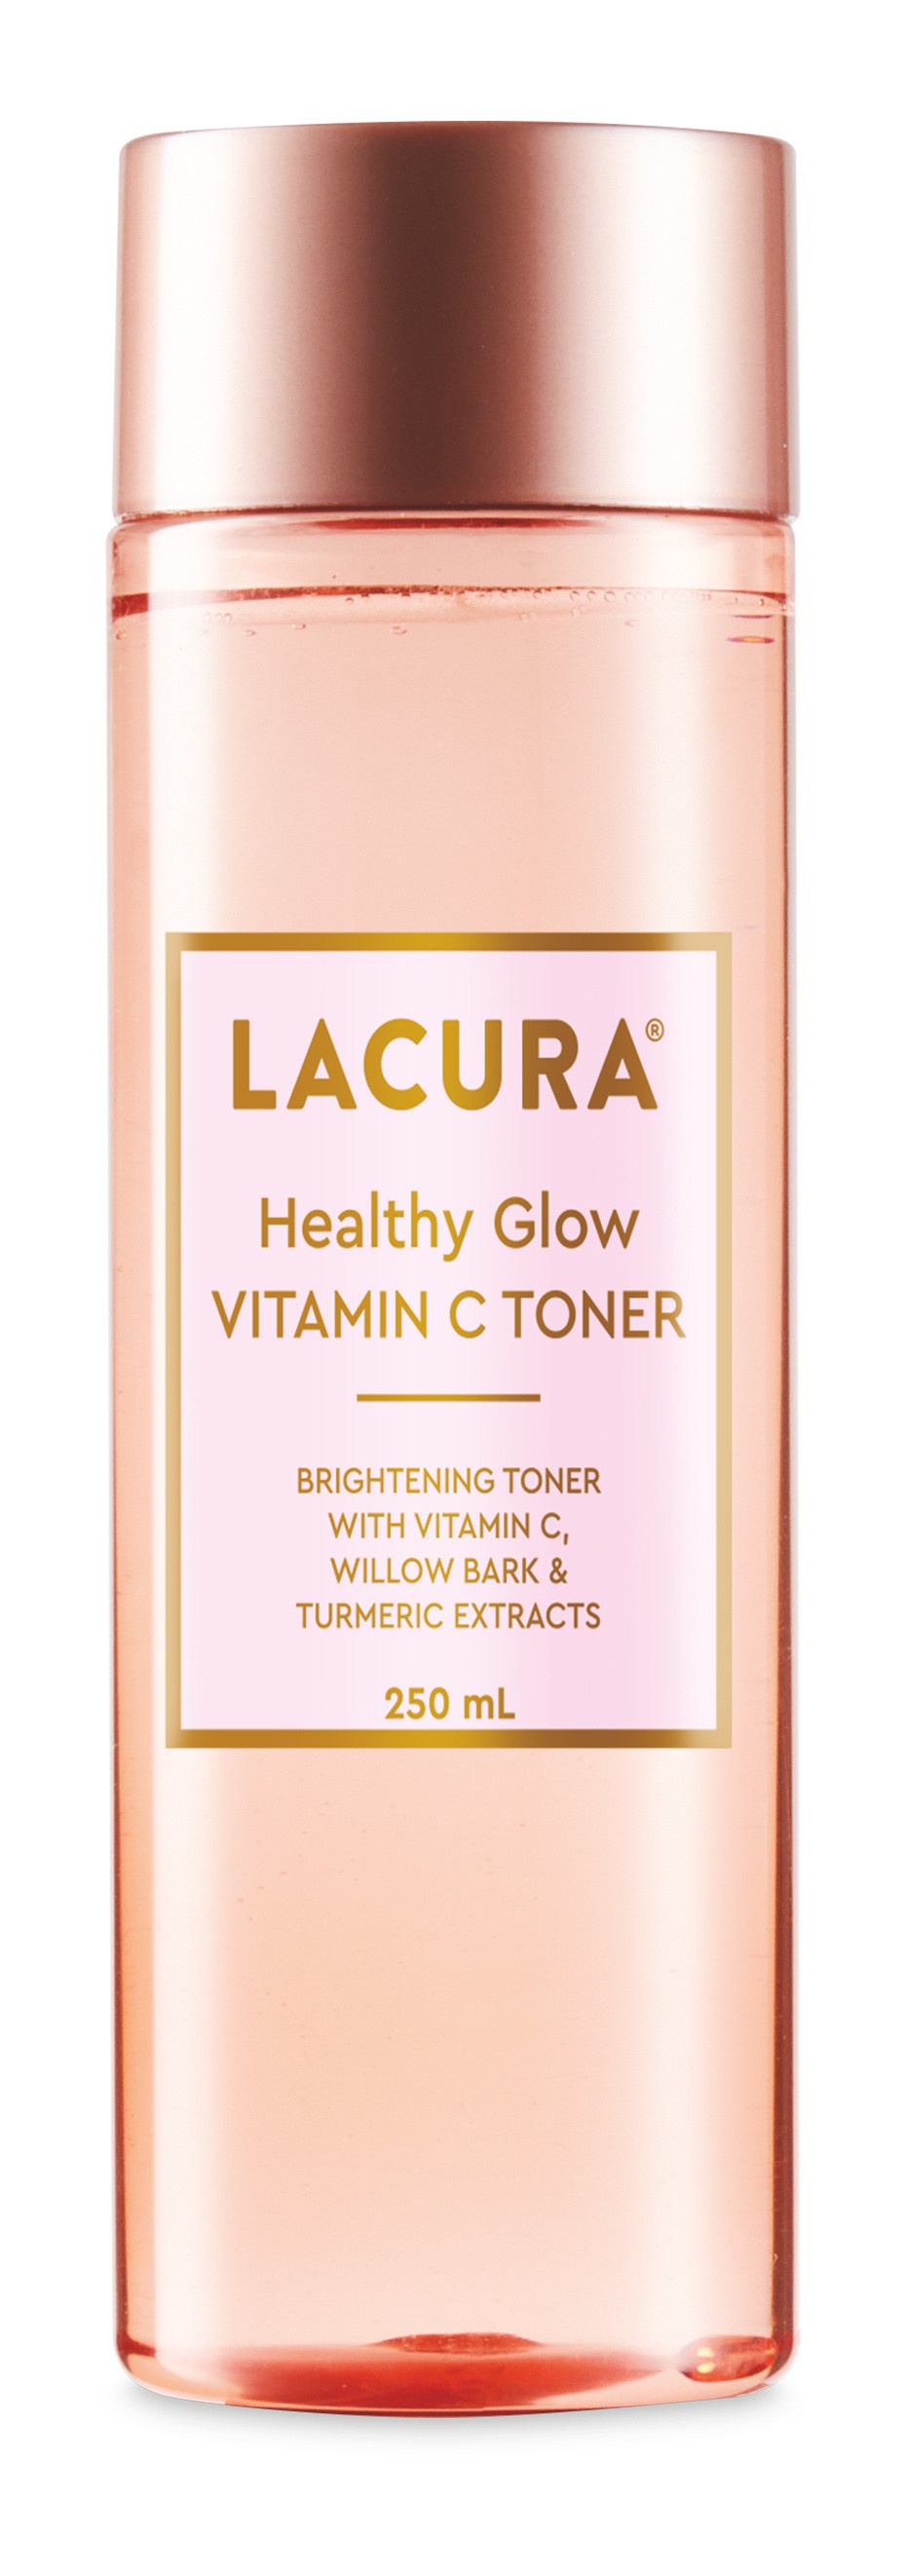 LACURA Healthy Glow Vitamin C Toner